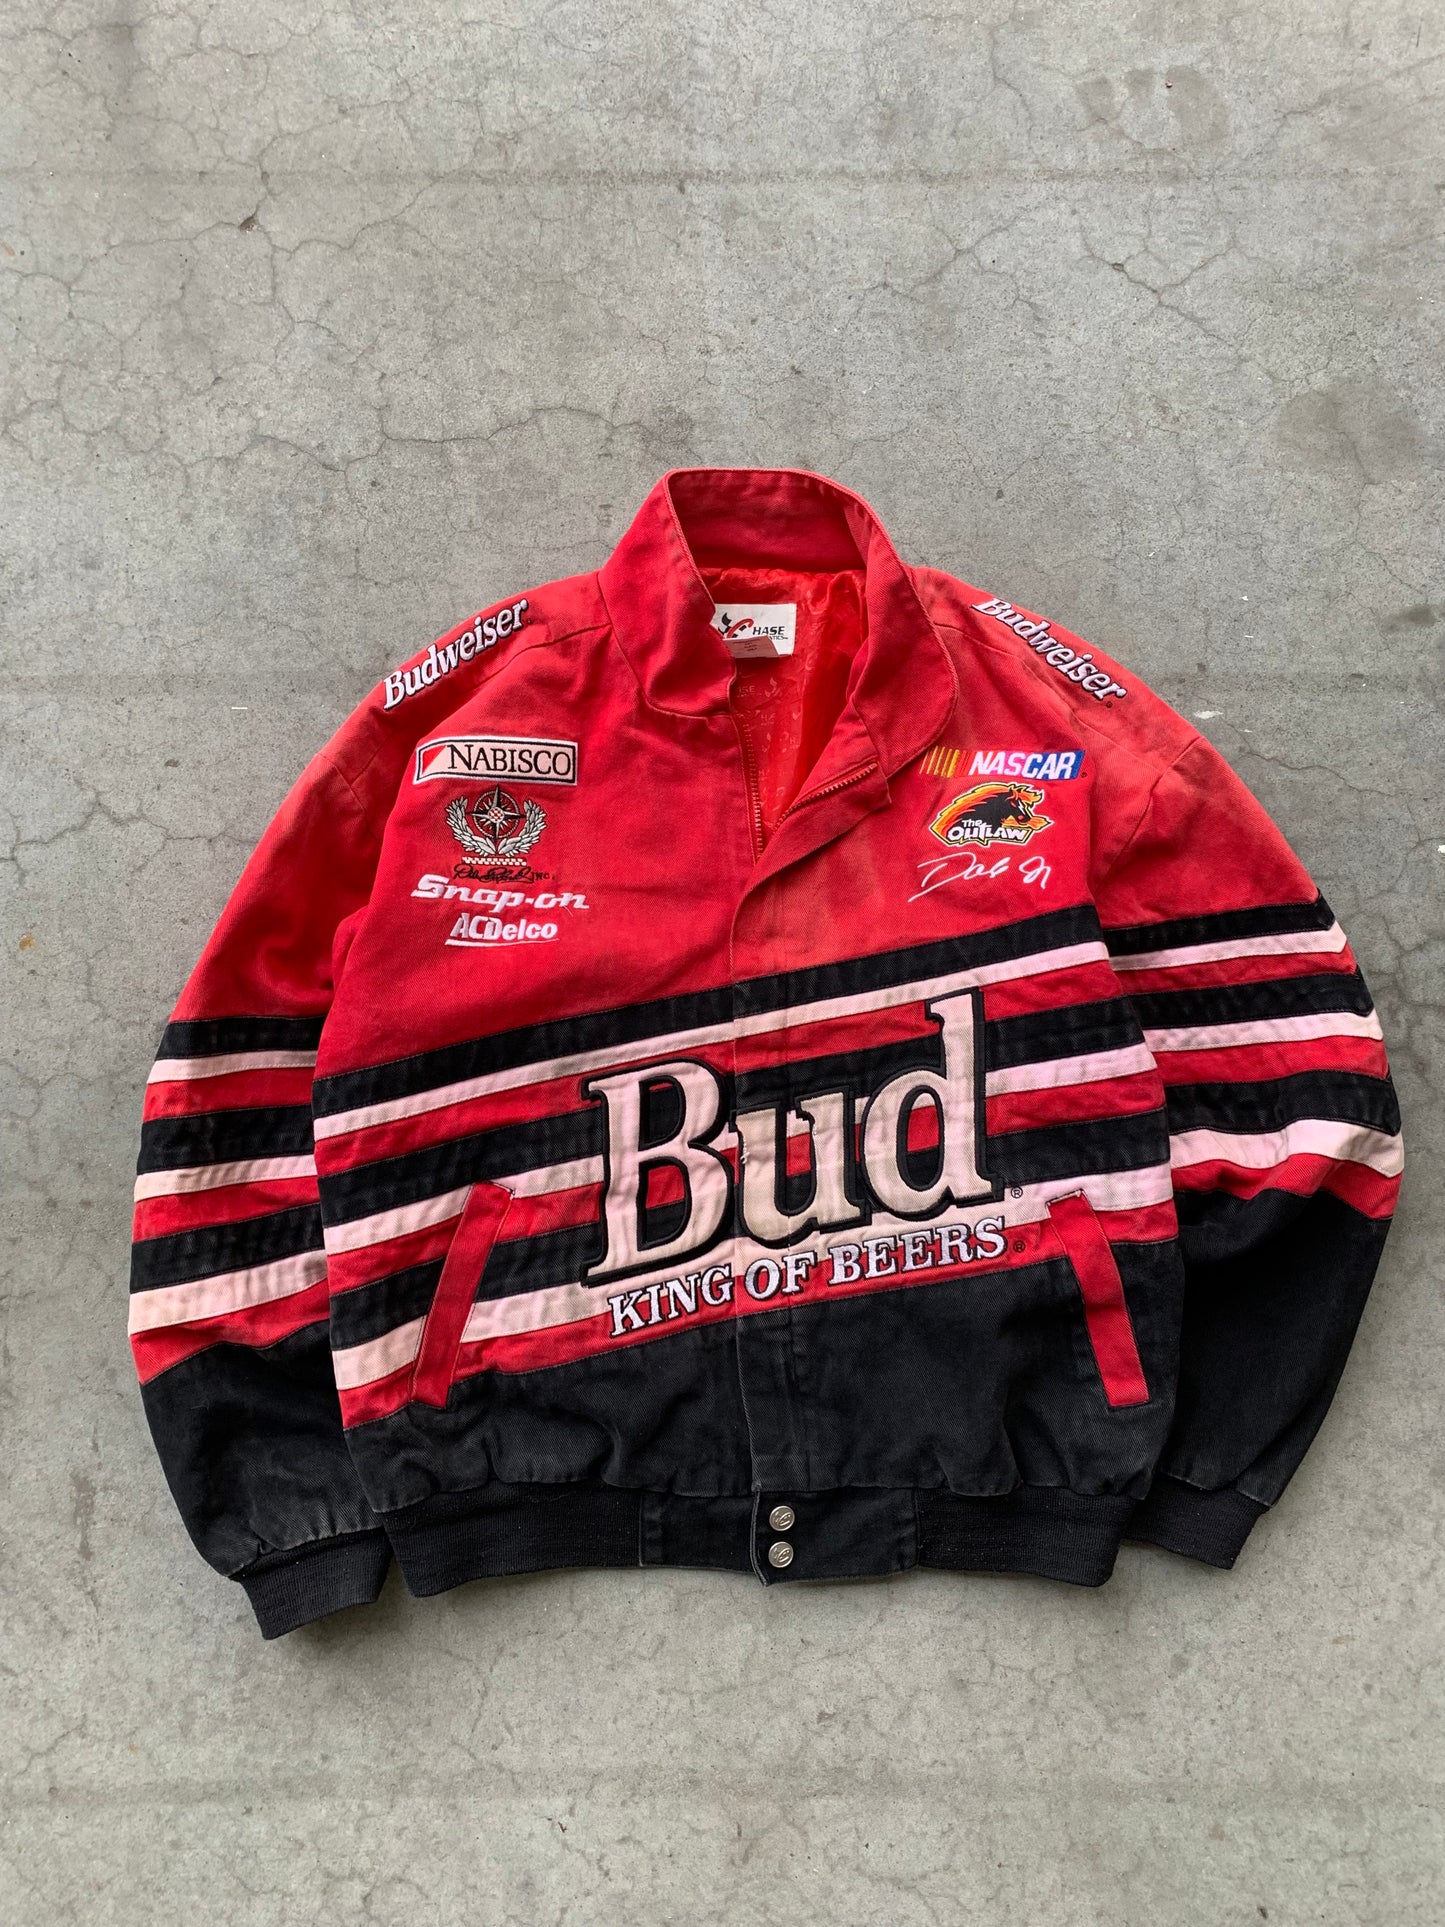 (L) Sunfaded Bud King of Beers Racing Jacket